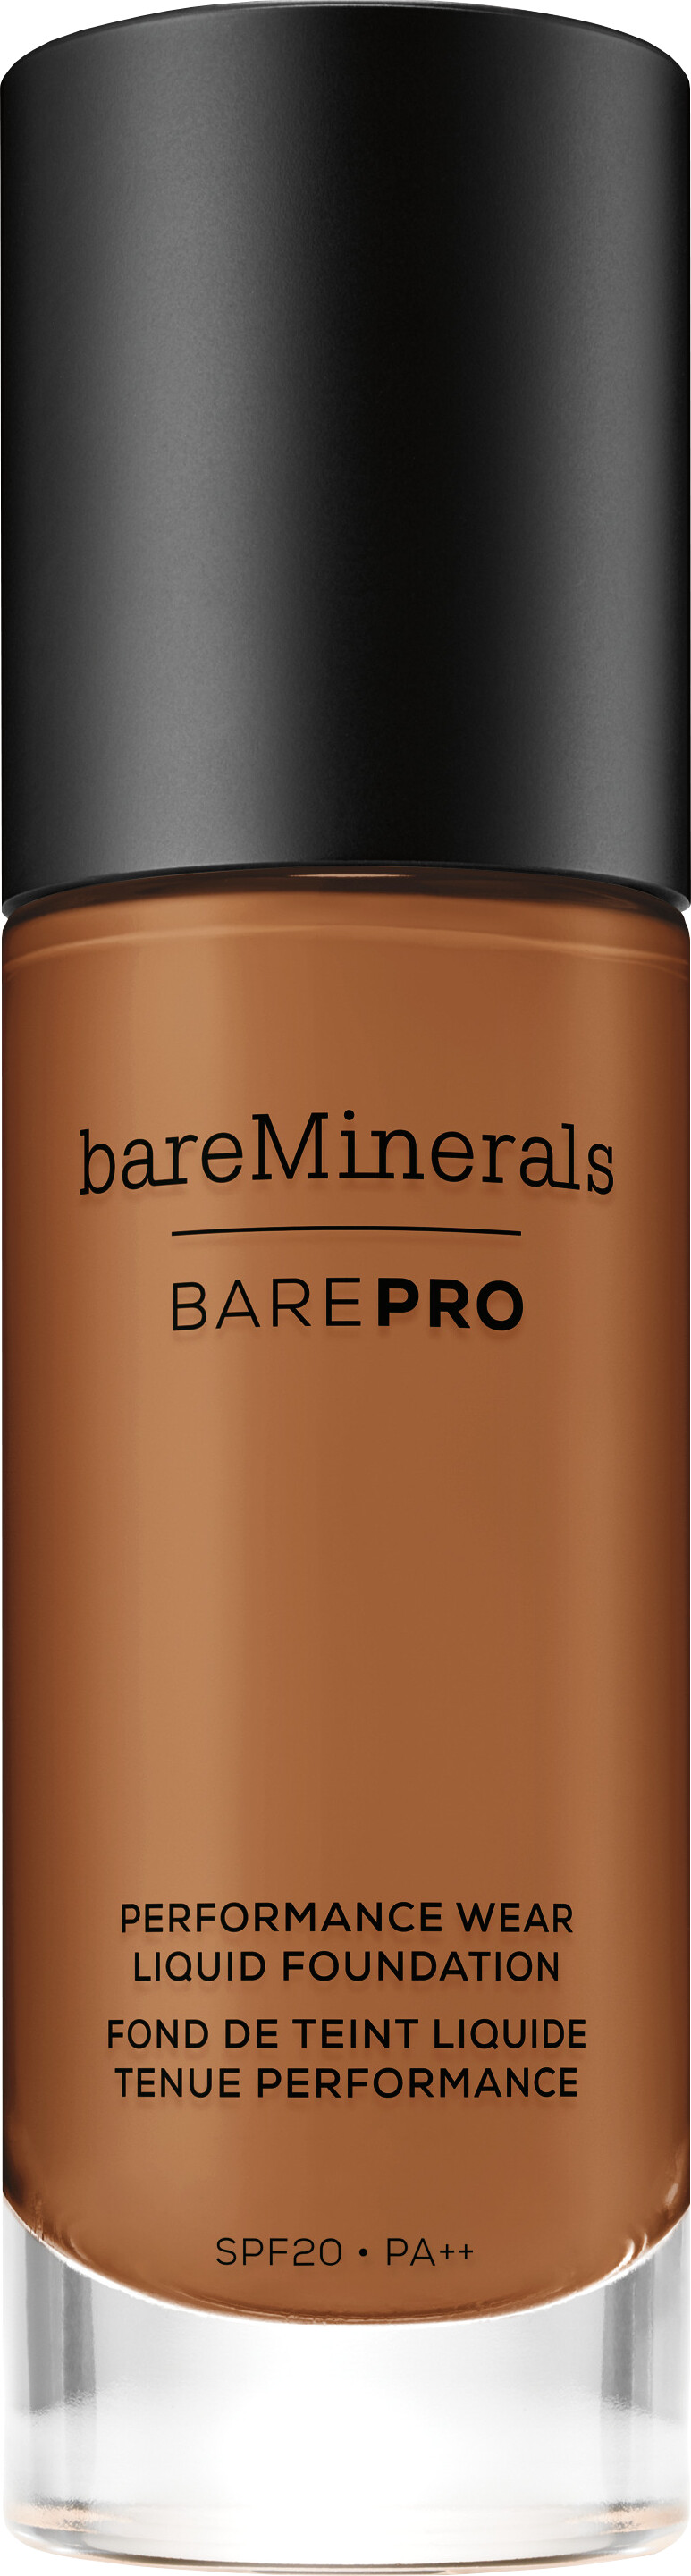 bareMinerals BAREPRO Performance Wear Liquid Foundation SPF20 30ml 24.5 - Maple